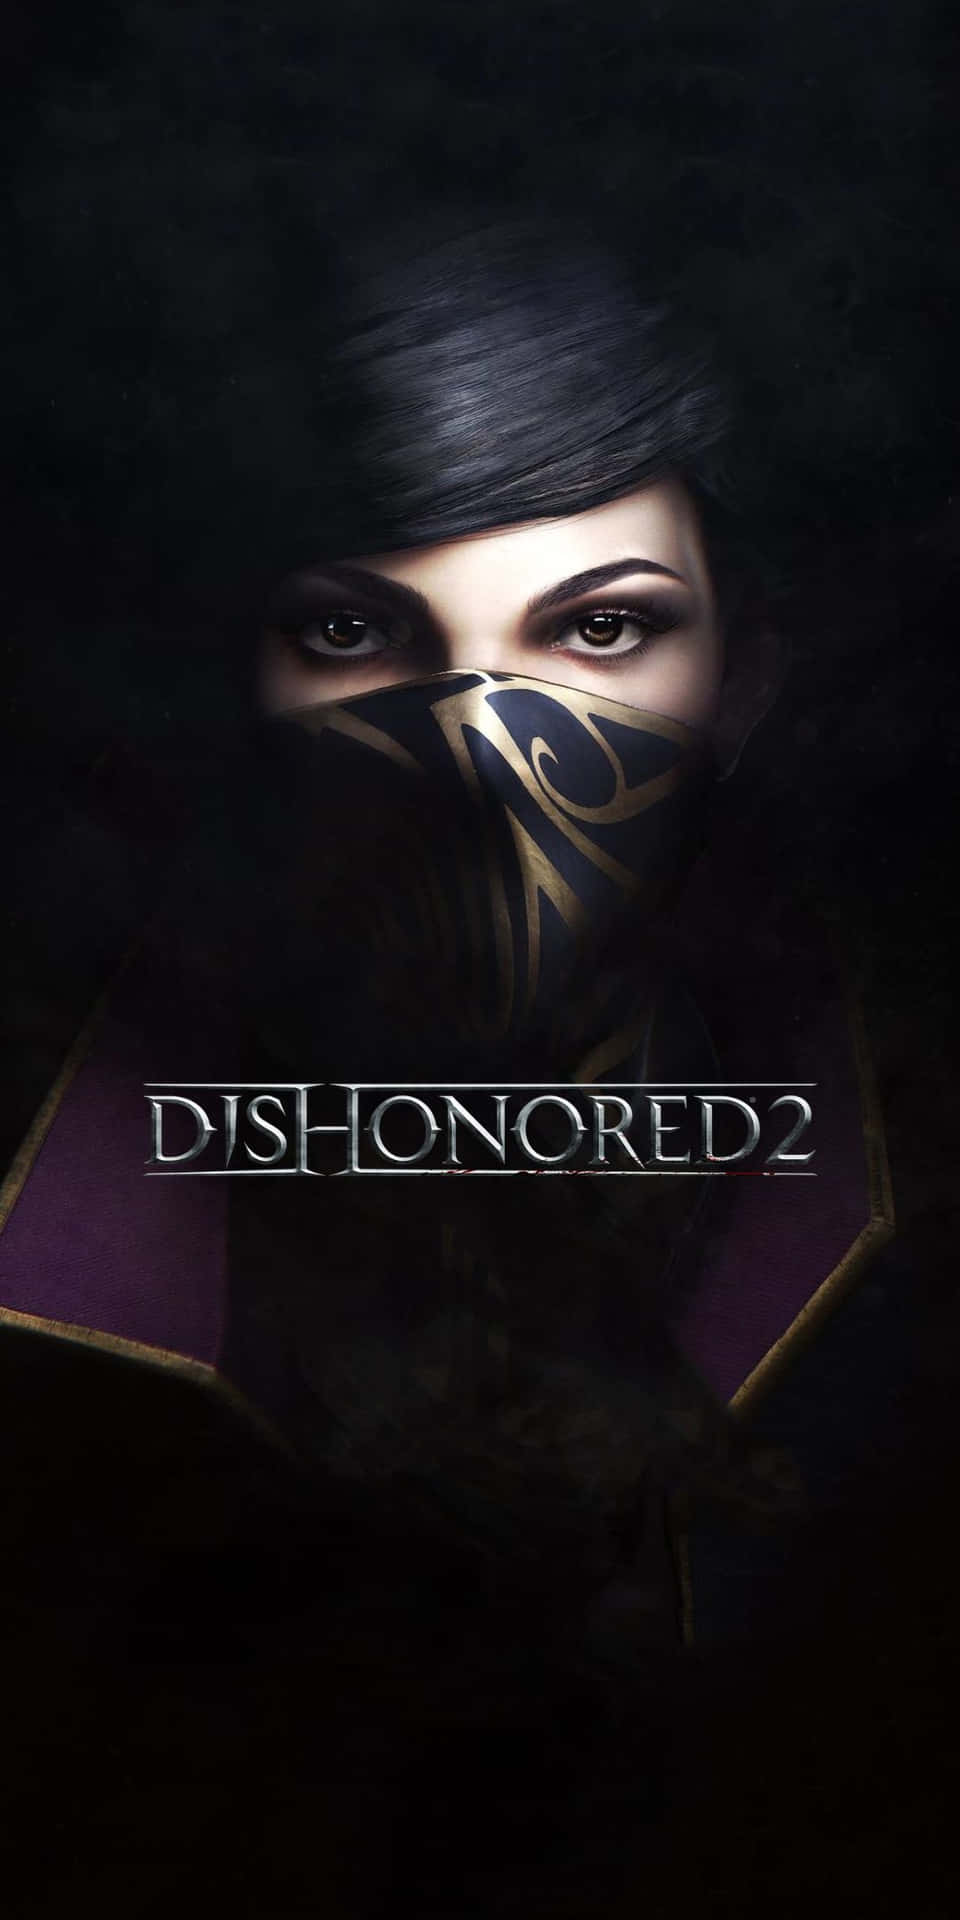 Dishonored2 - Equipo De Escritorio - Equipo De Escritorio - Equipo De Escritorio - Equipo De Escritorio - Equipo De Escritorio